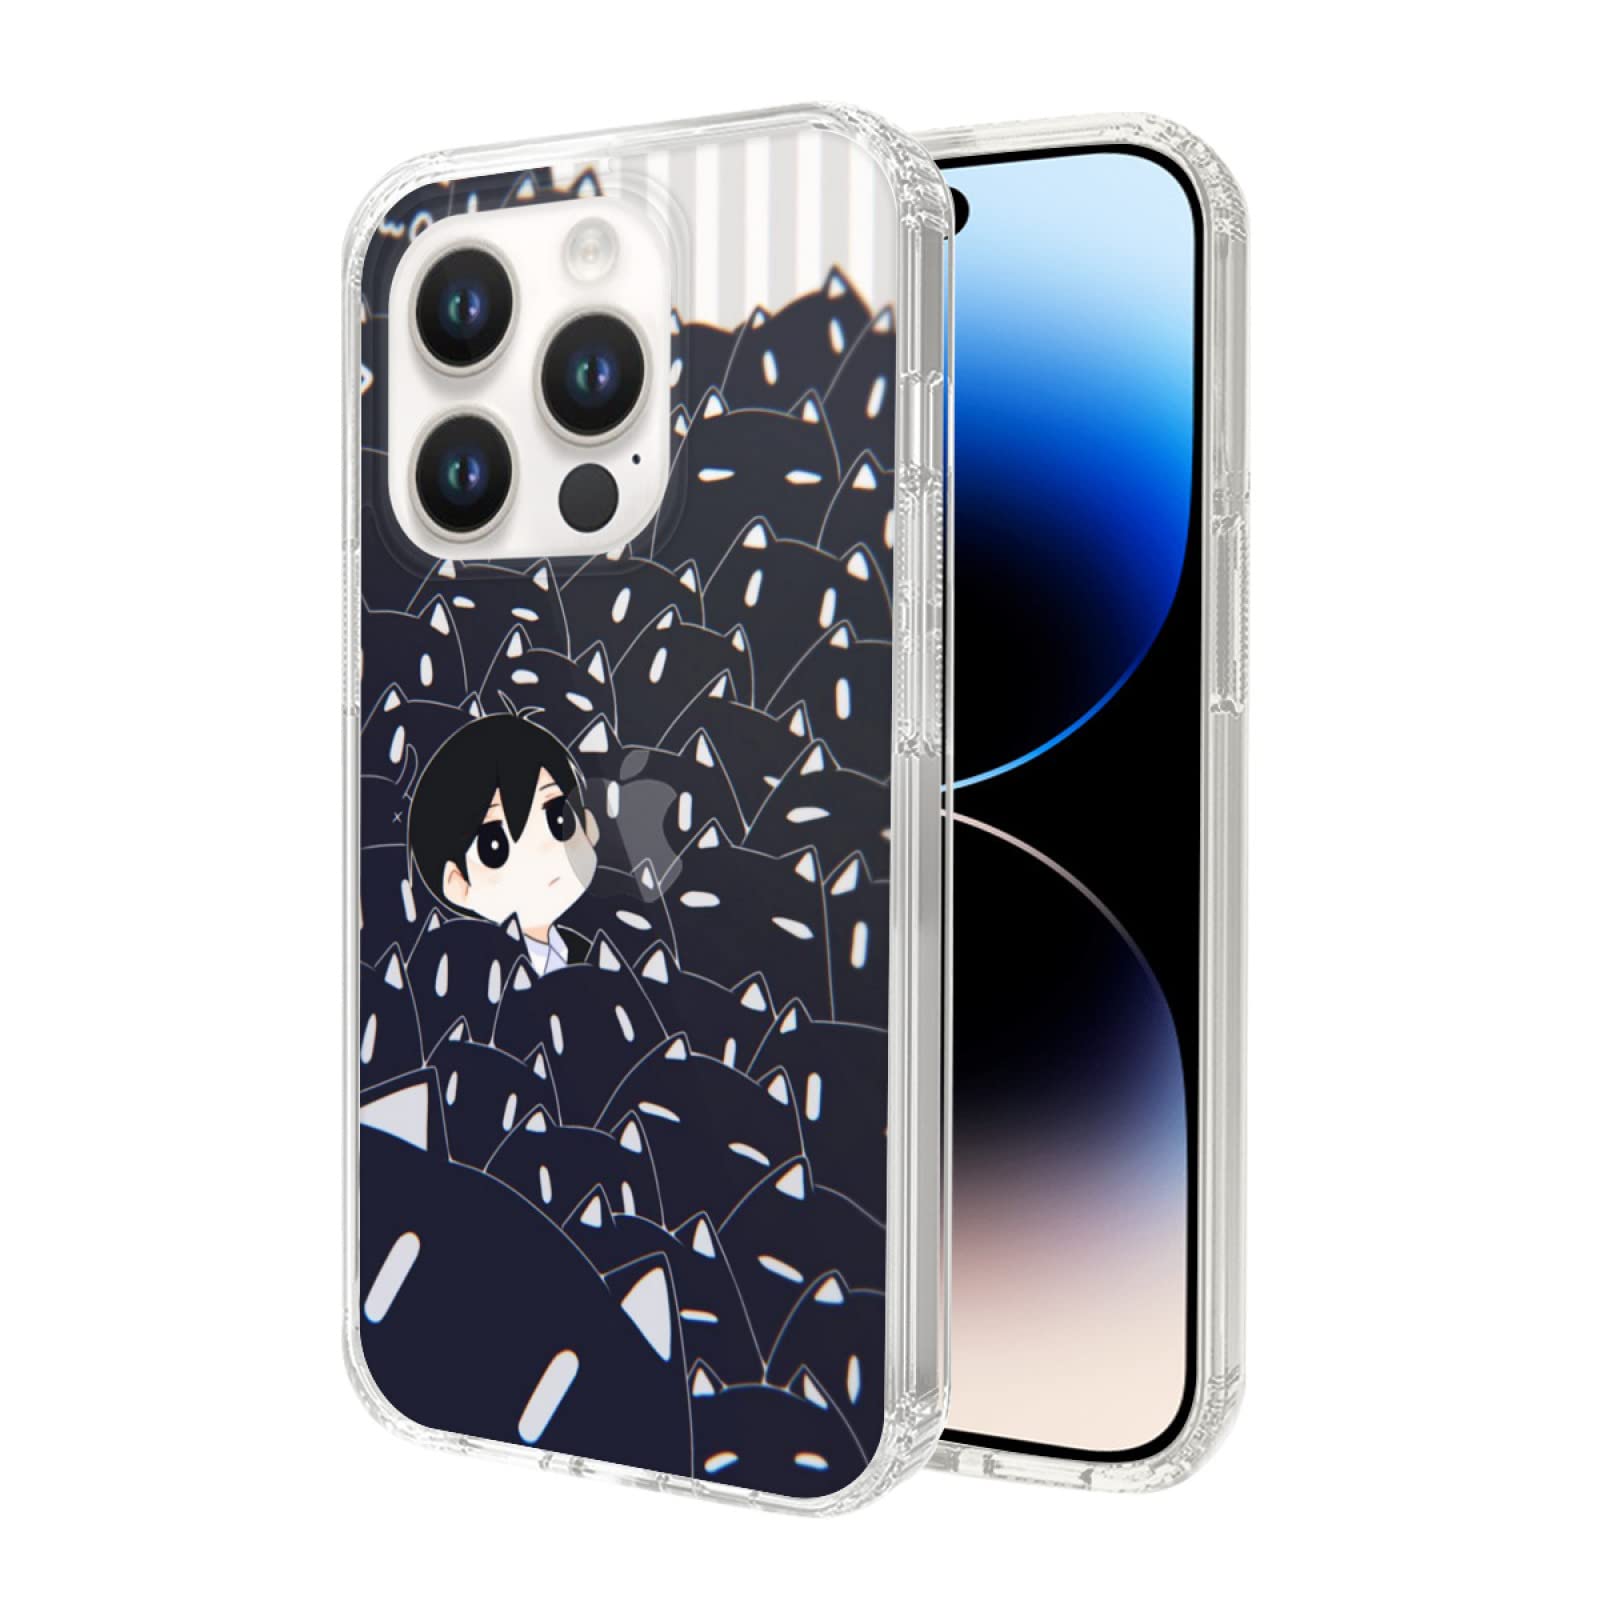 NARUTO SHARINGAN EYE ANIME iPhone 11 Pro Max Case Cover